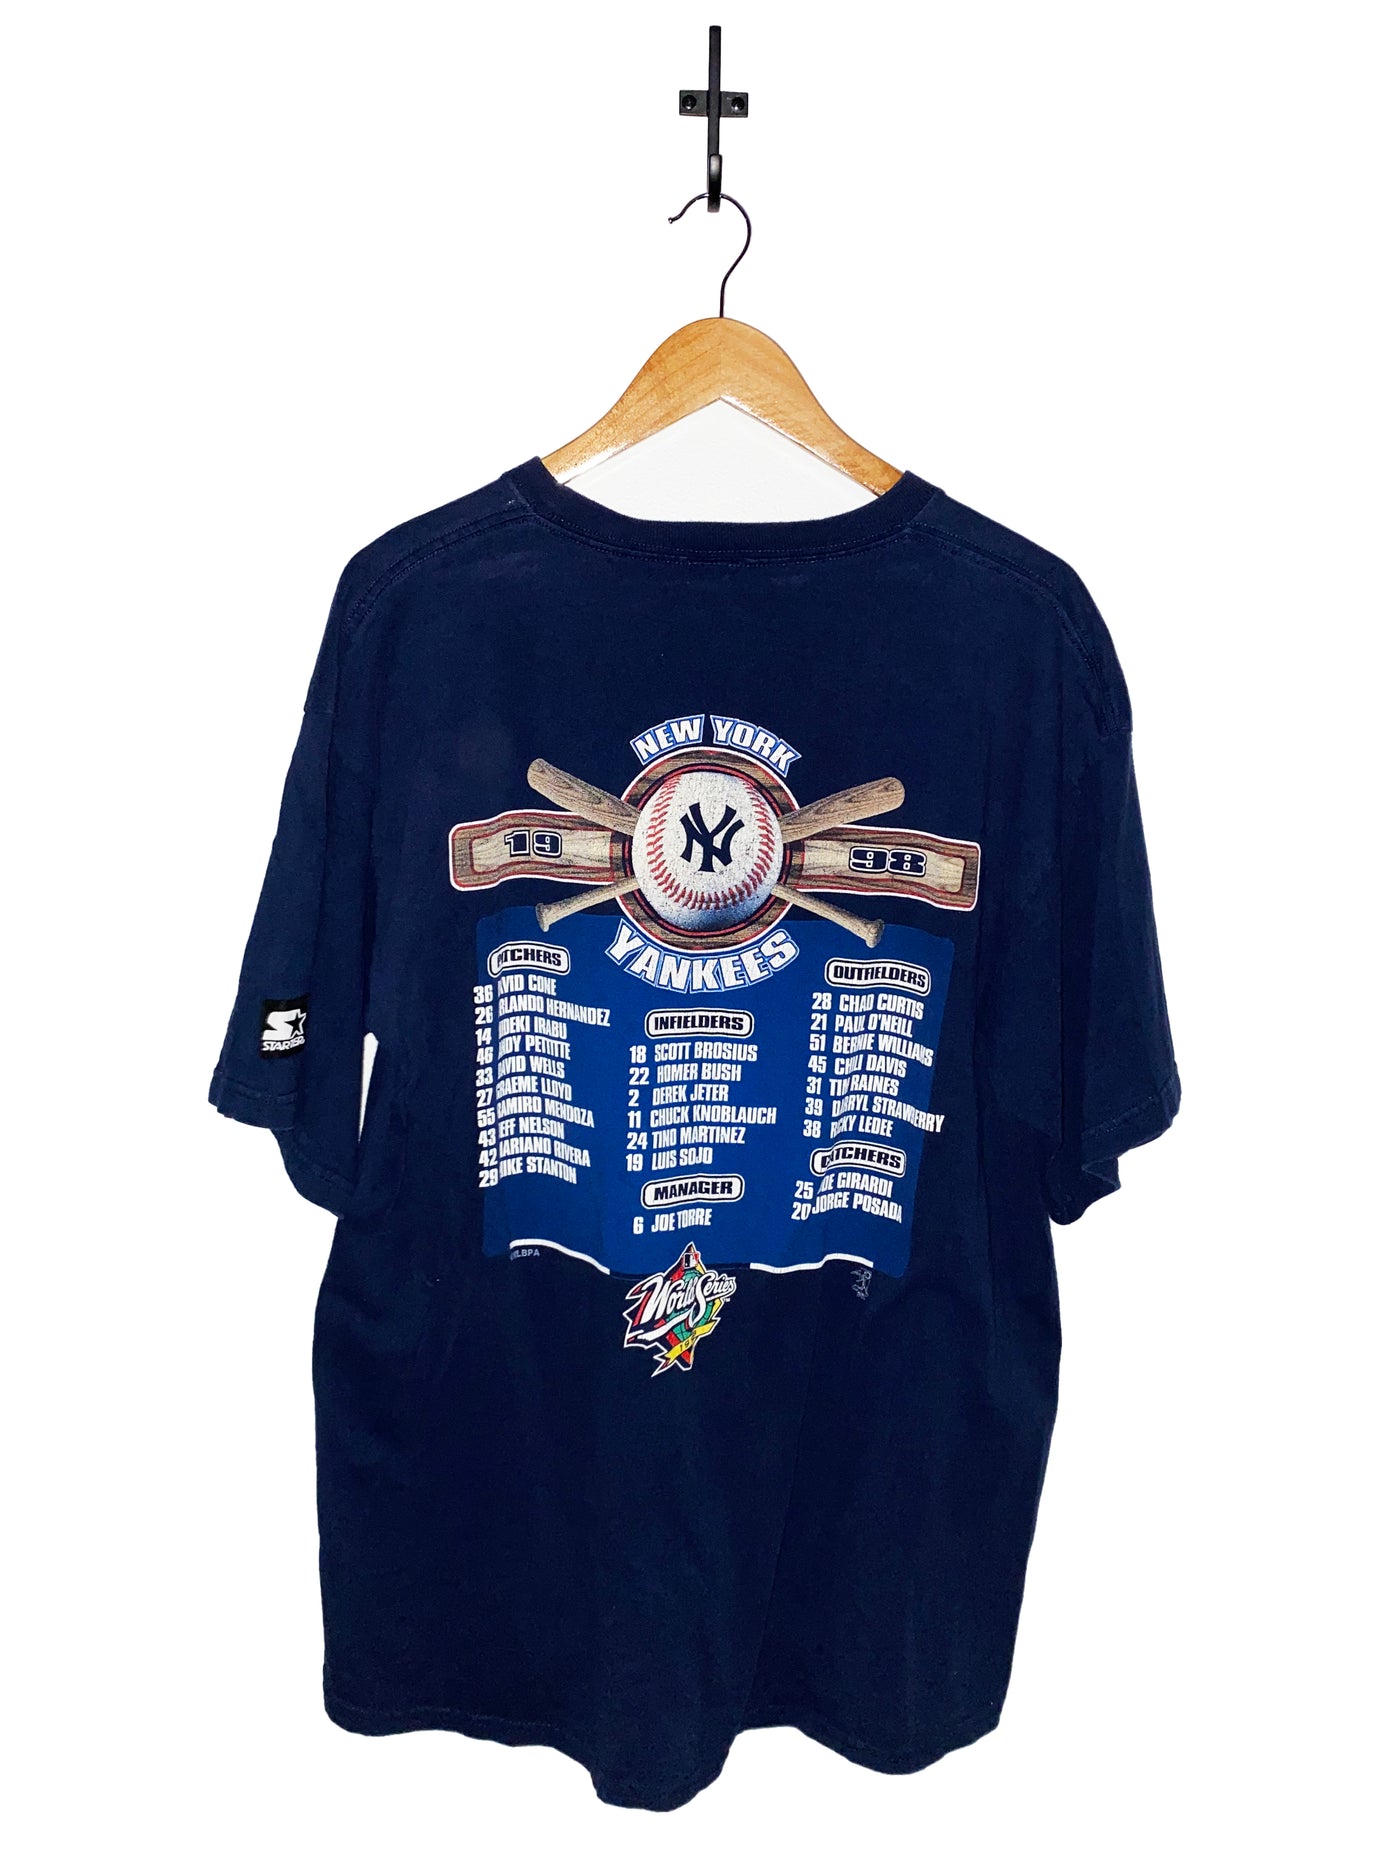 Vintage 1998 New York Yankees World Series T-Shirt